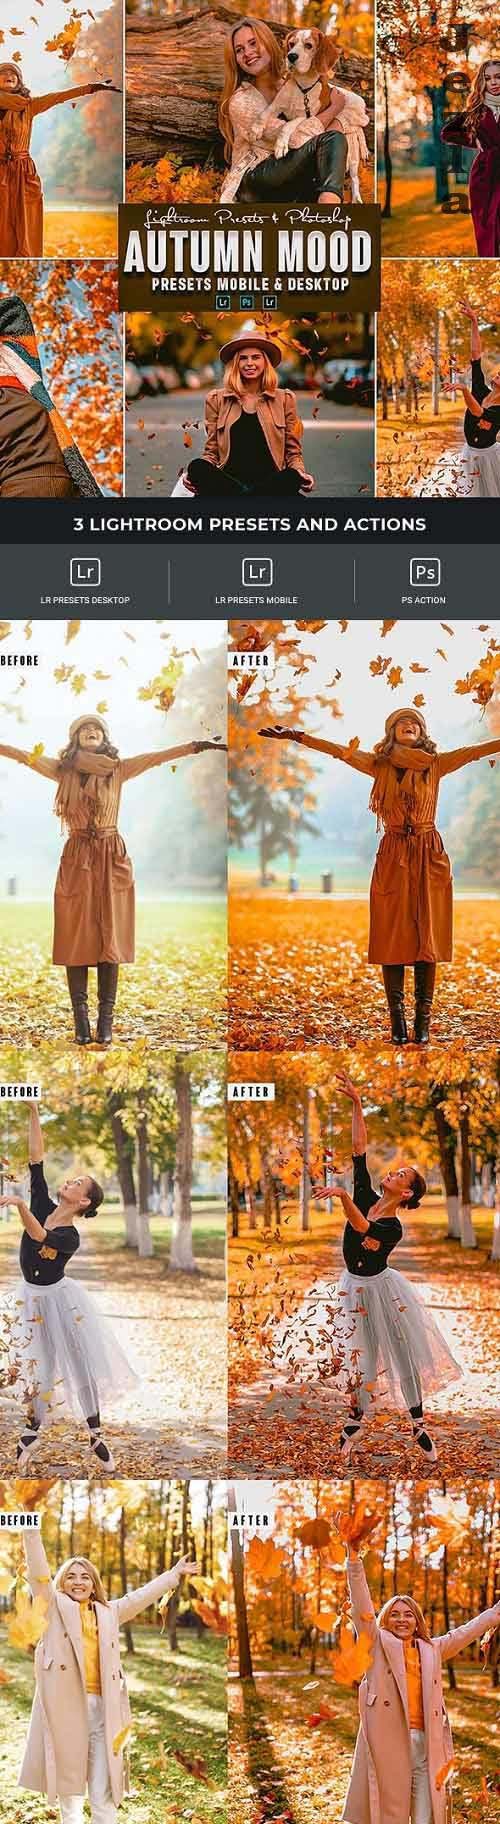 Autumn Photoshop Action & Lightrom Presets - 34298026